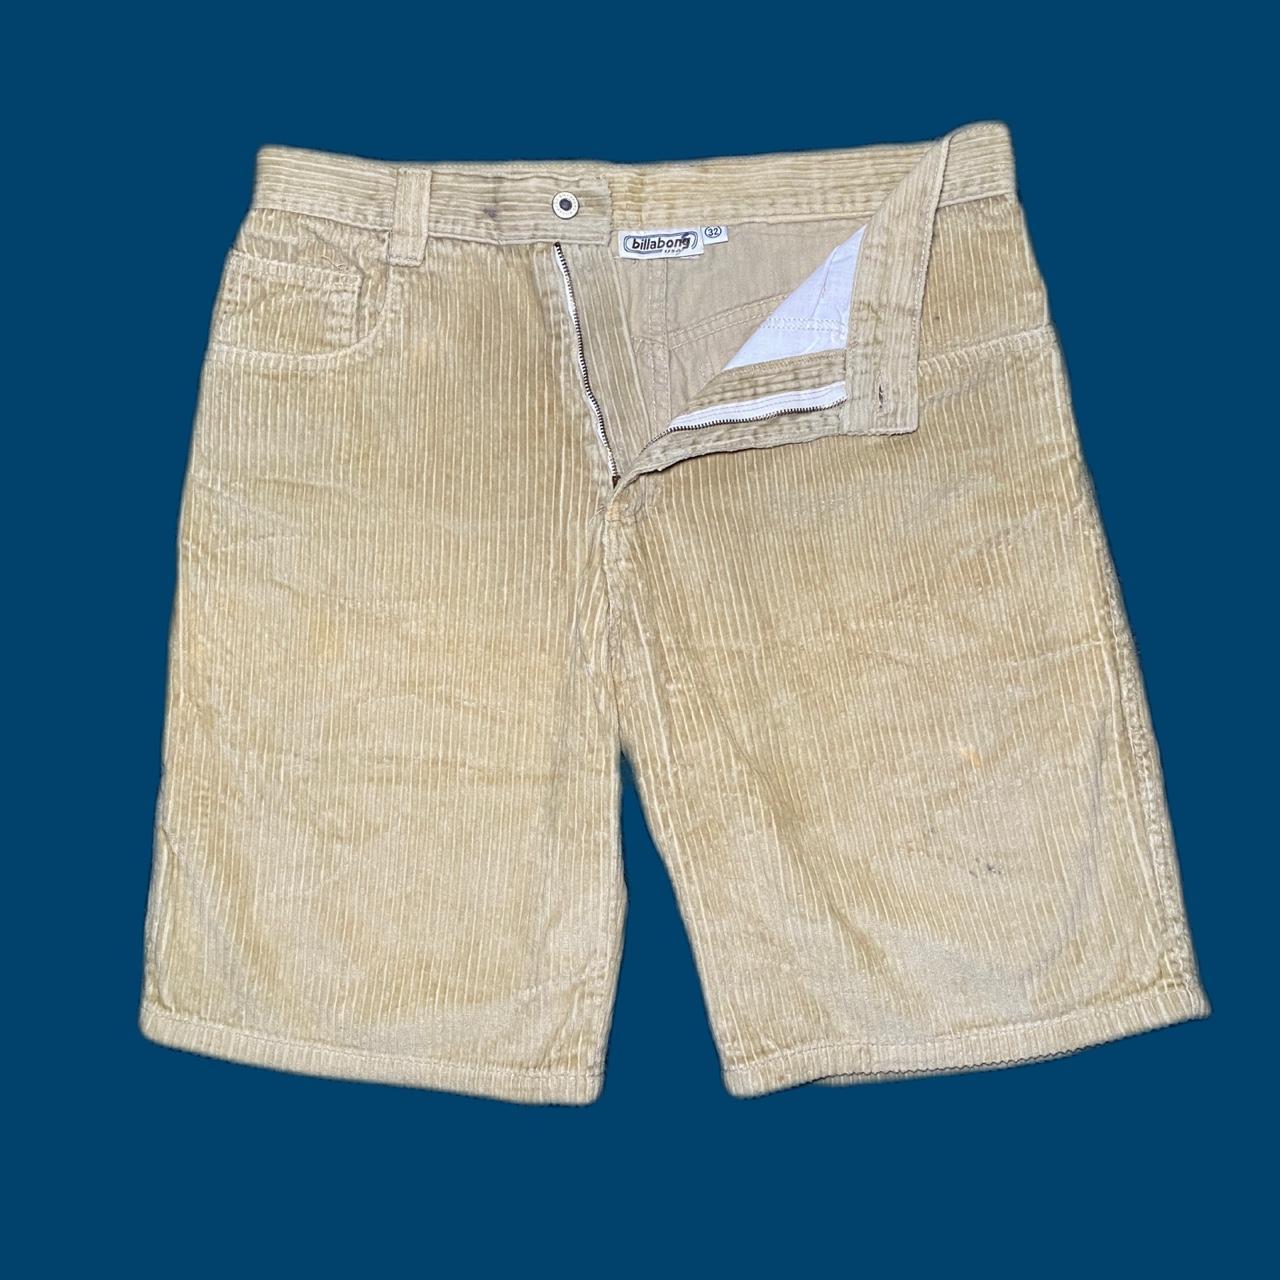 Billabong Men's Tan Shorts